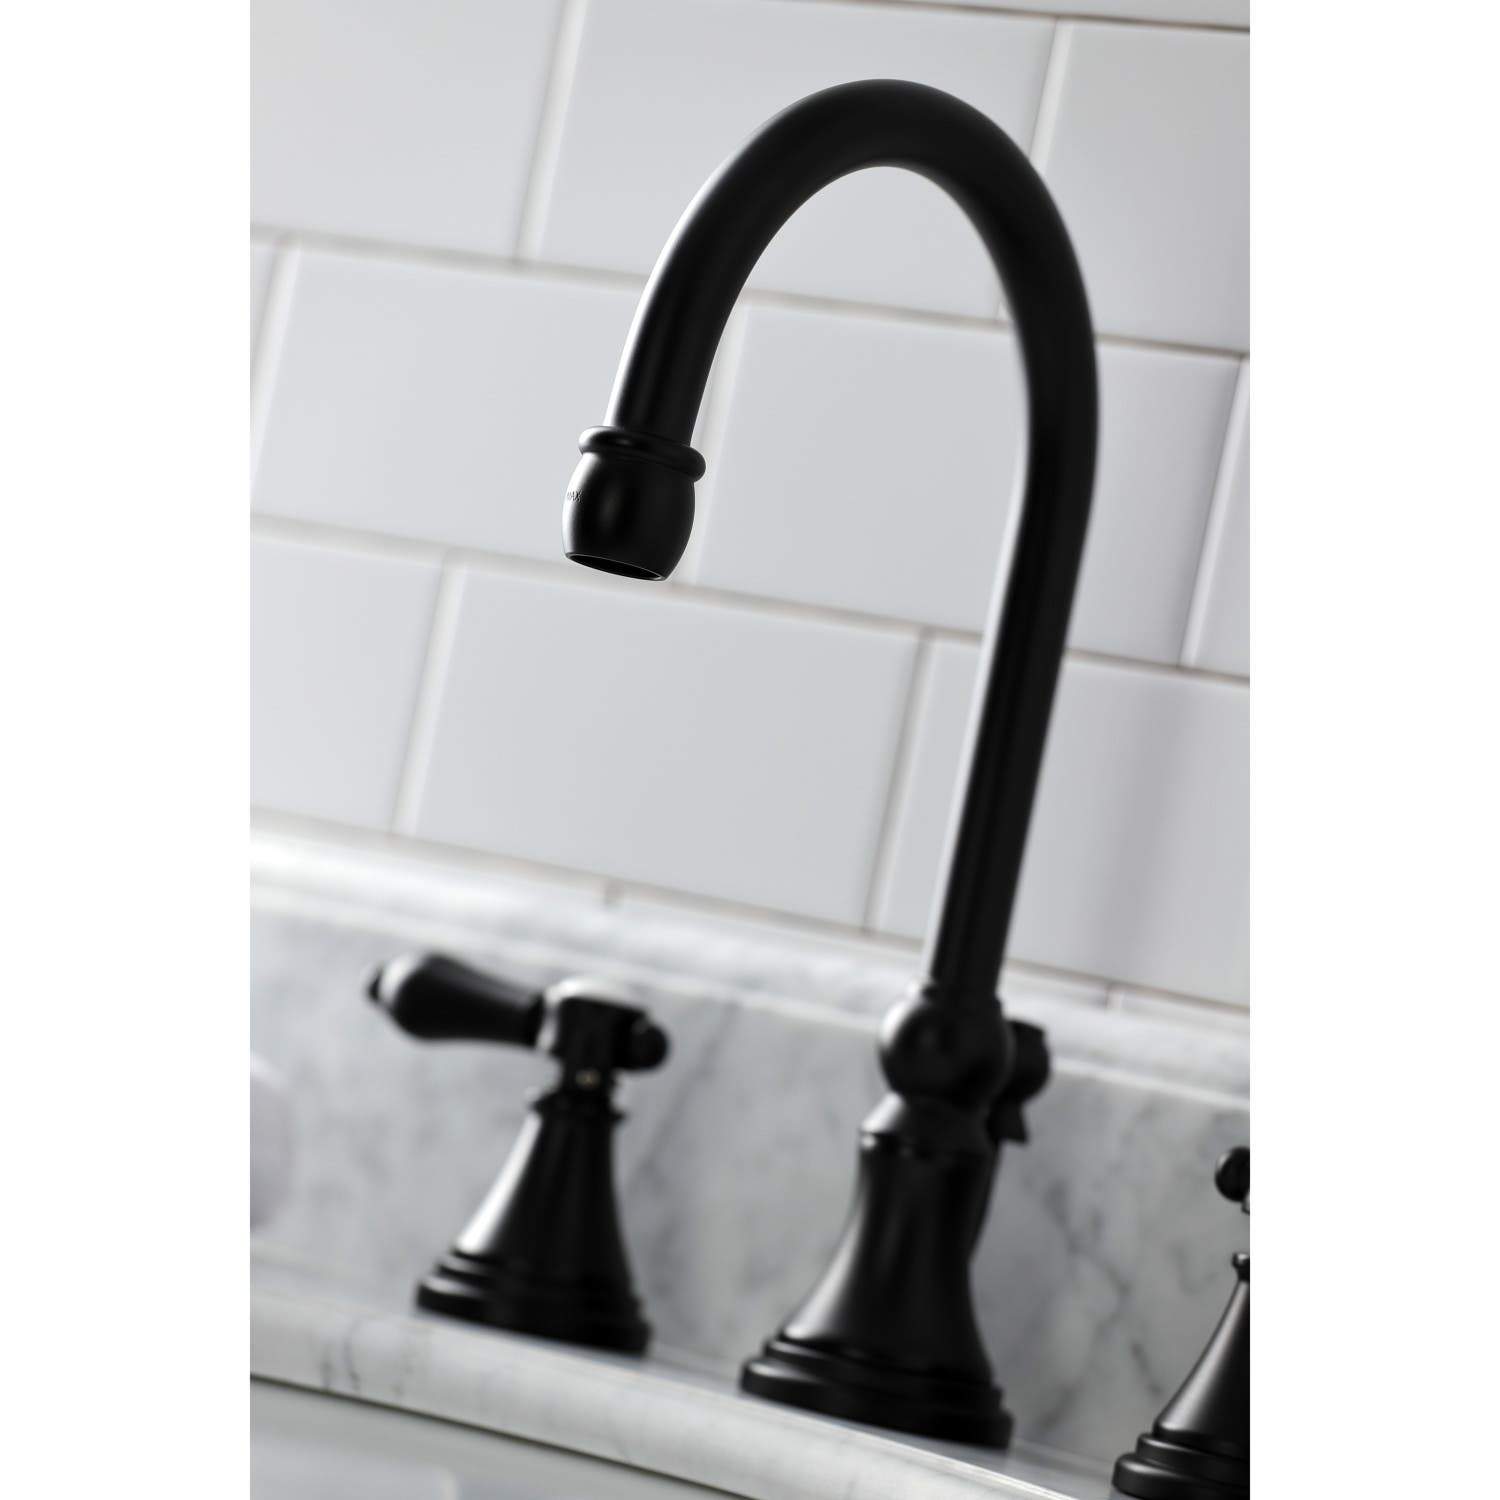 Kingston Brass KS298XBAL-P Heirloom Widespread Bathroom Faucet with Brass Pop-Up